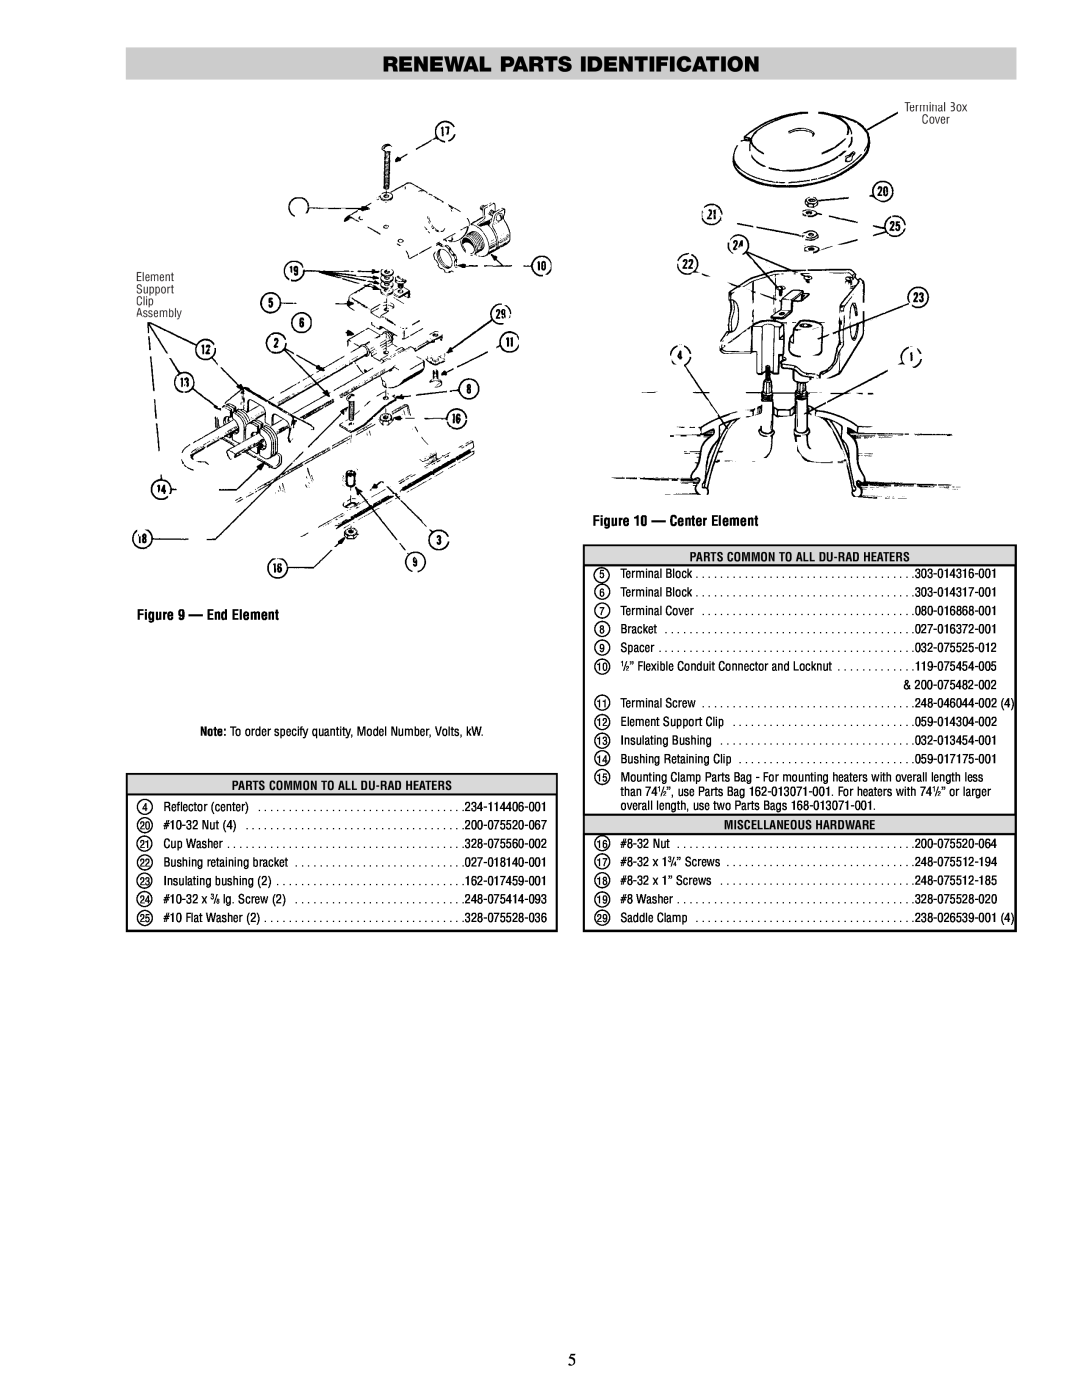 Chromalox DU-RAD-458 6.04 757 specifications Renewal Parts Identification, End Element, Center Element 